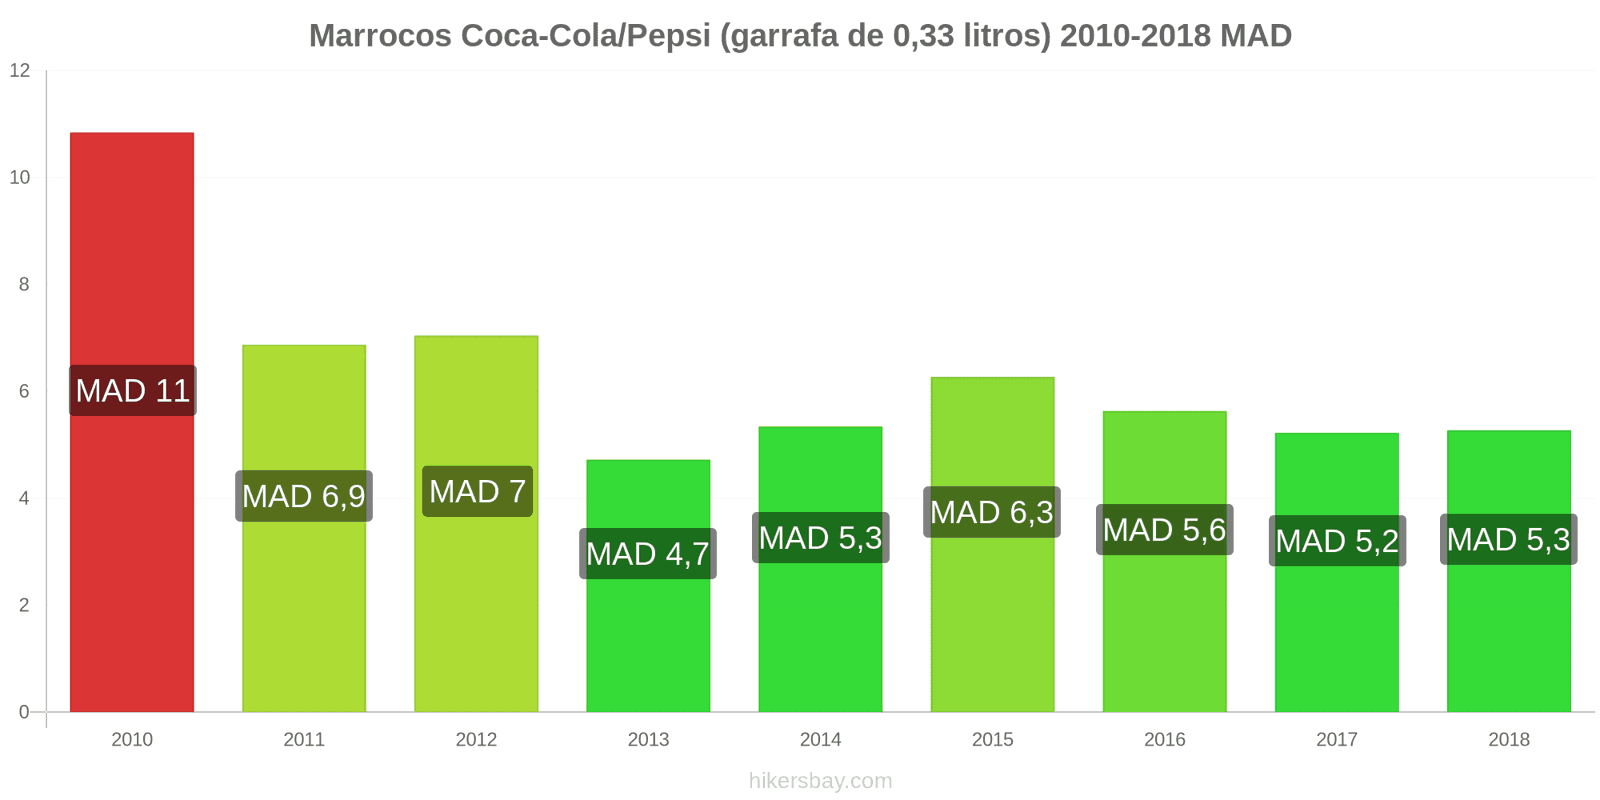 Marrocos mudanças de preços Coca-Cola/Pepsi (garrafa de 0.33 litros) hikersbay.com